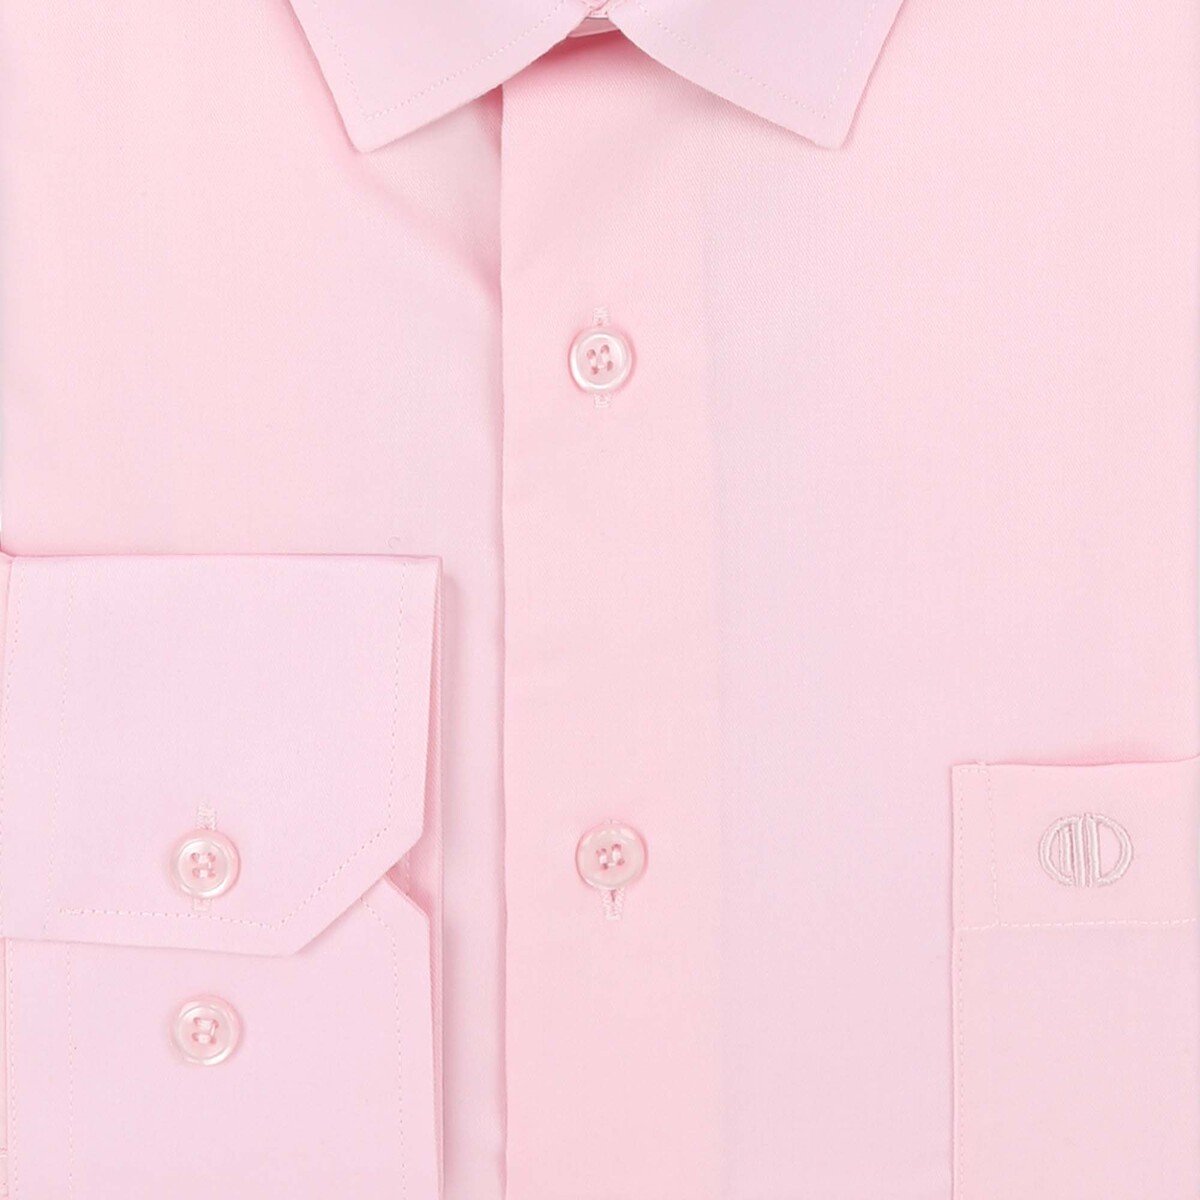 Marco Donateli Men's Formal Shirt Solid Light Pink, 40